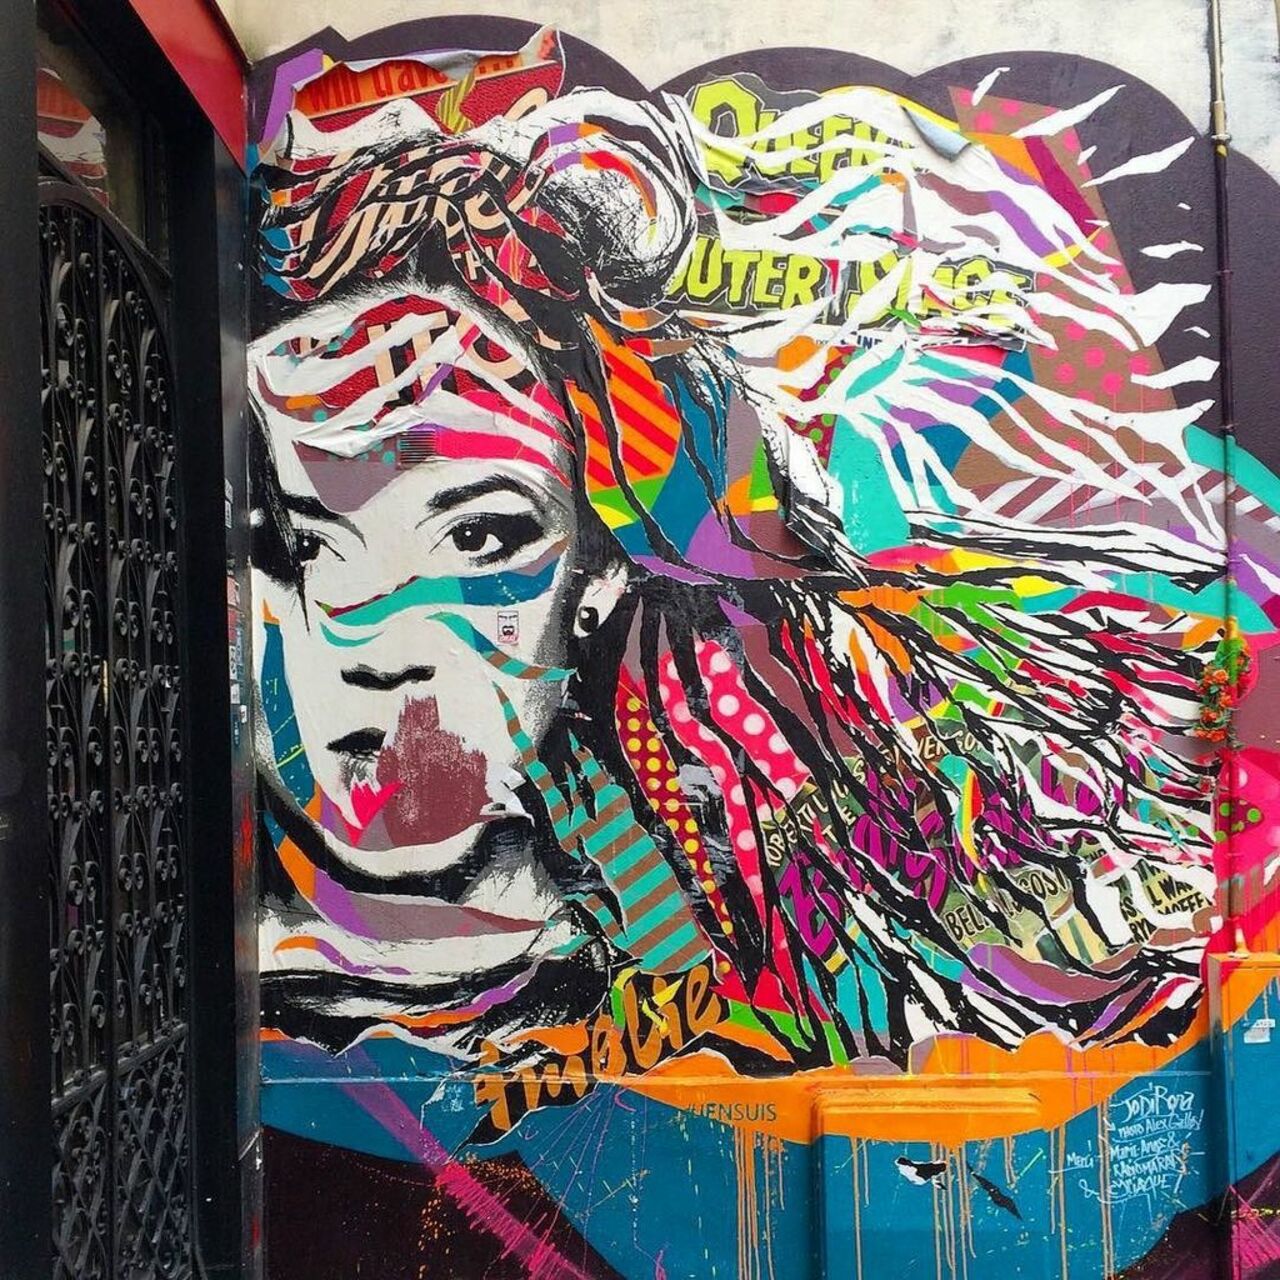 RT @StArtEverywhere: Wish you a colorful morning with @jodibona #jodibona #streetart #streetartparis #parisstreetart #graffiti #graffiti… https://t.co/i9U6ziaiww